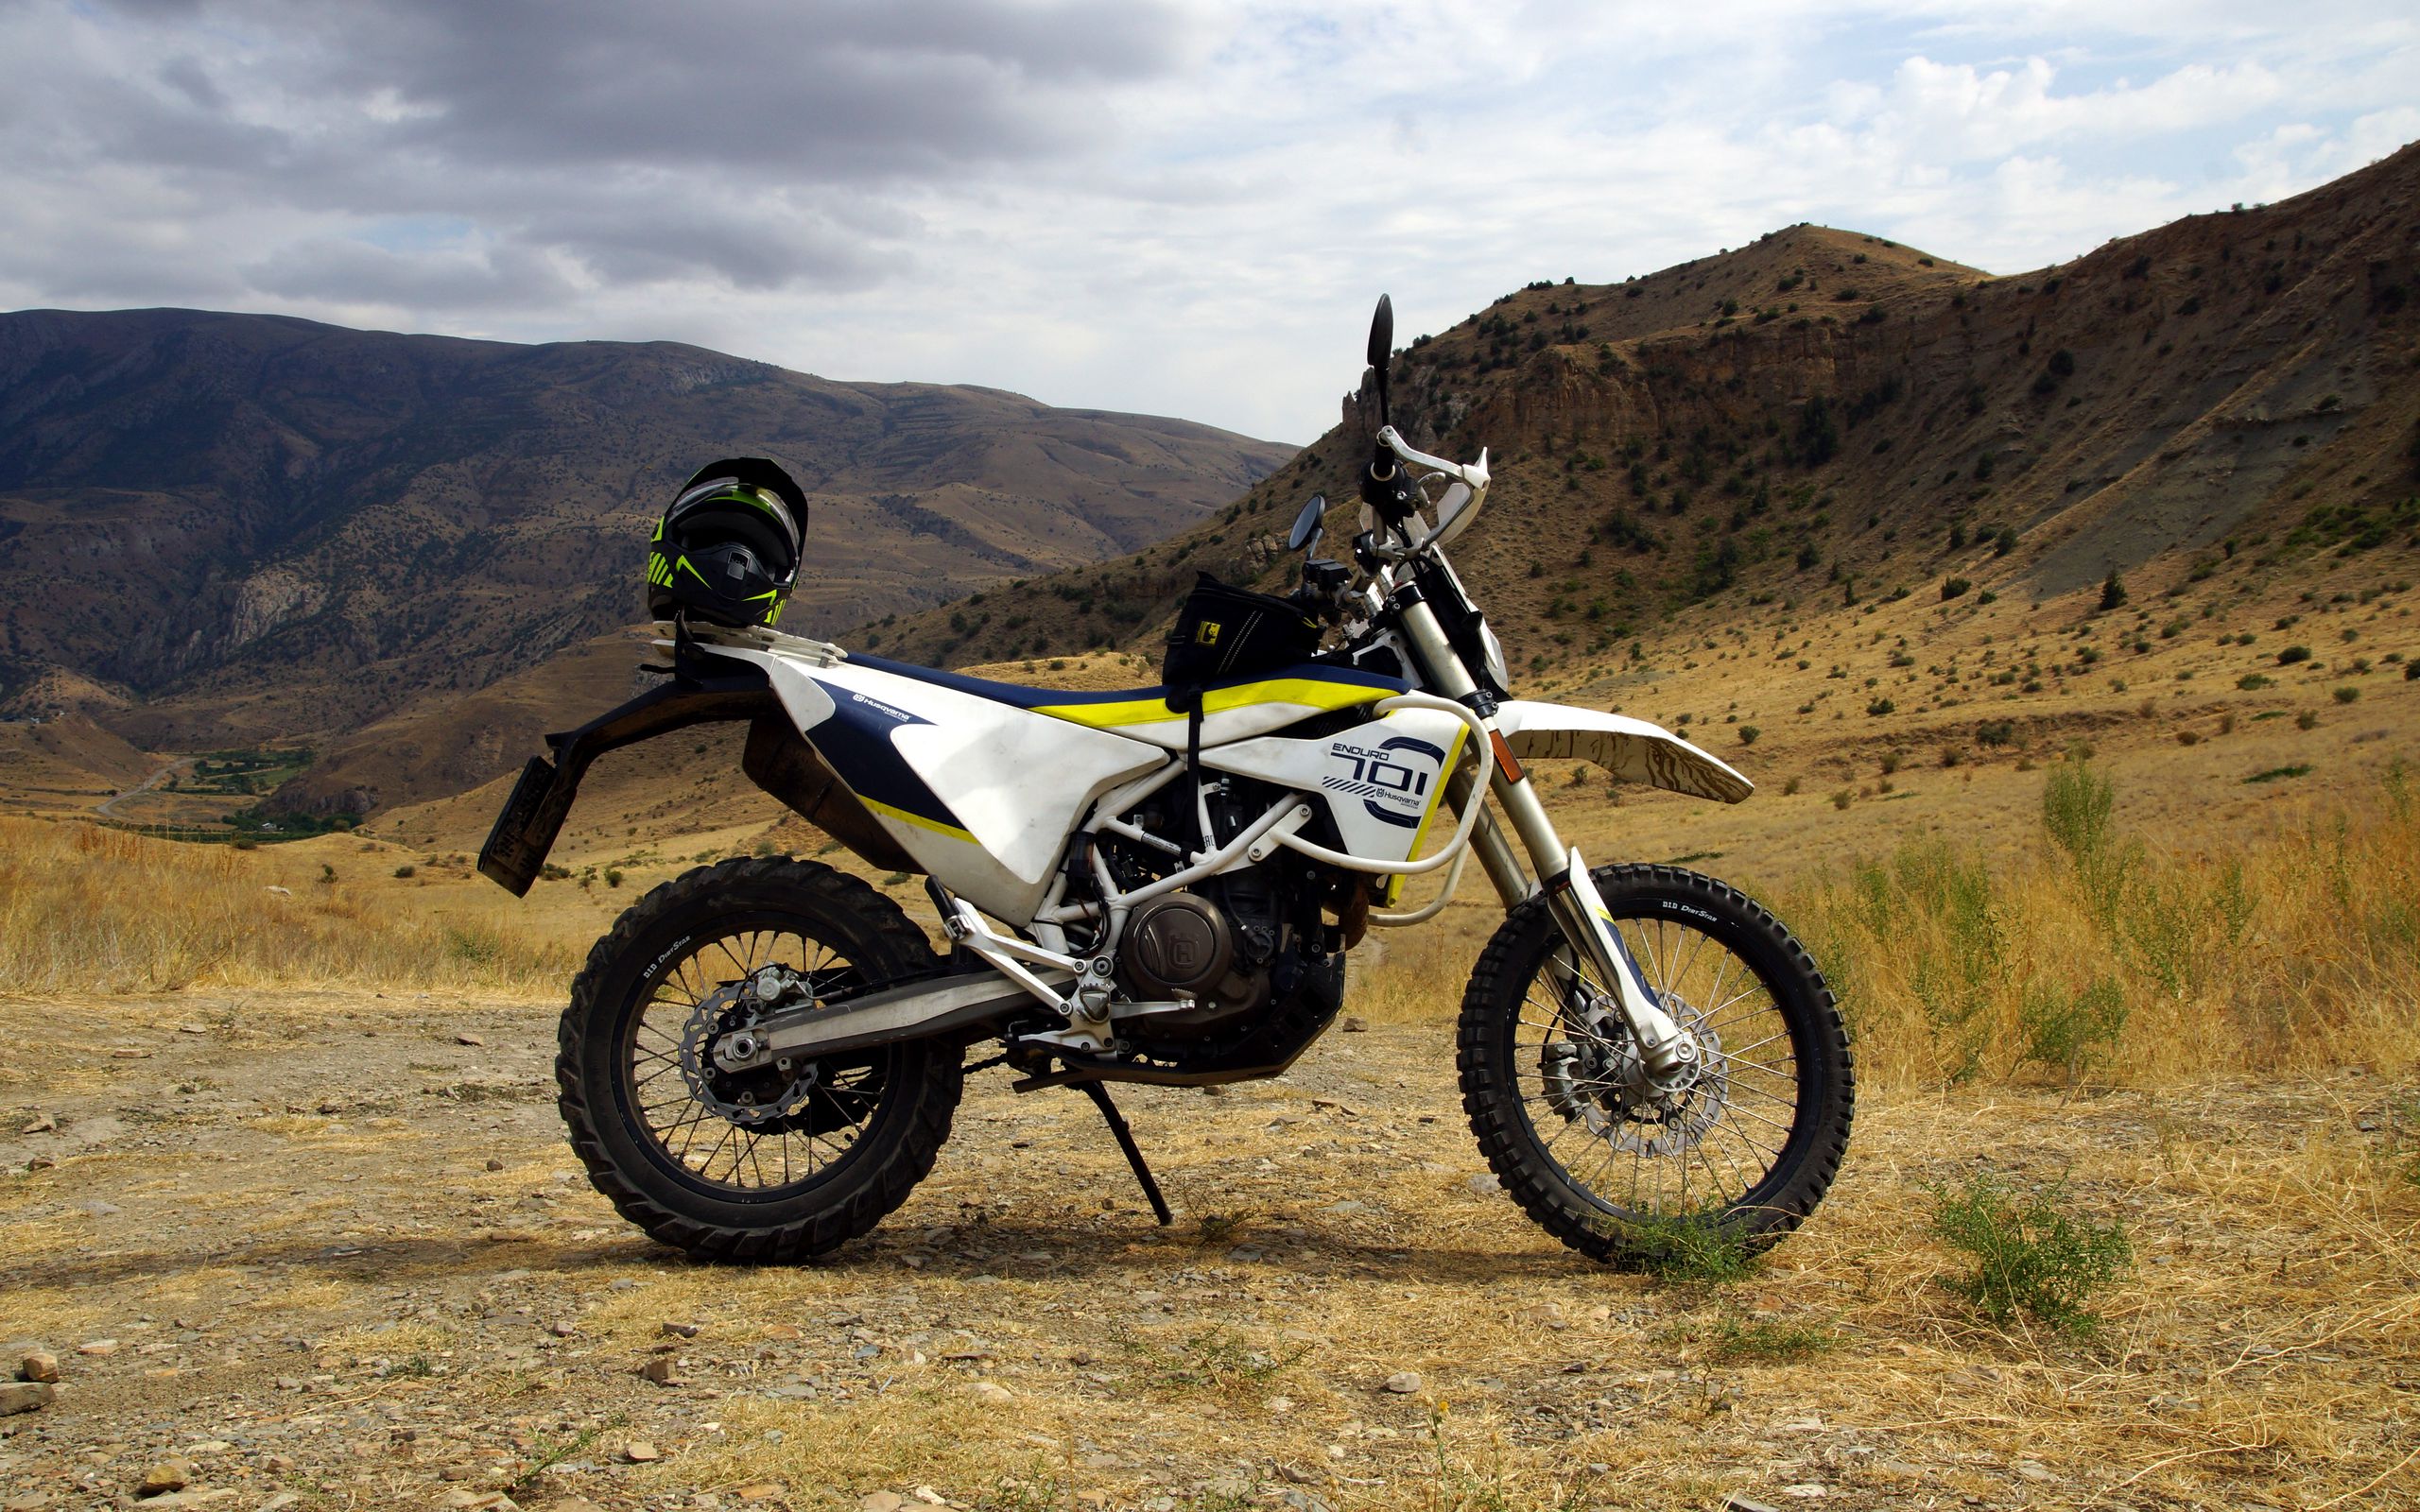 2560x1600 Wallpaper motorcycle, bike, mountains, nature